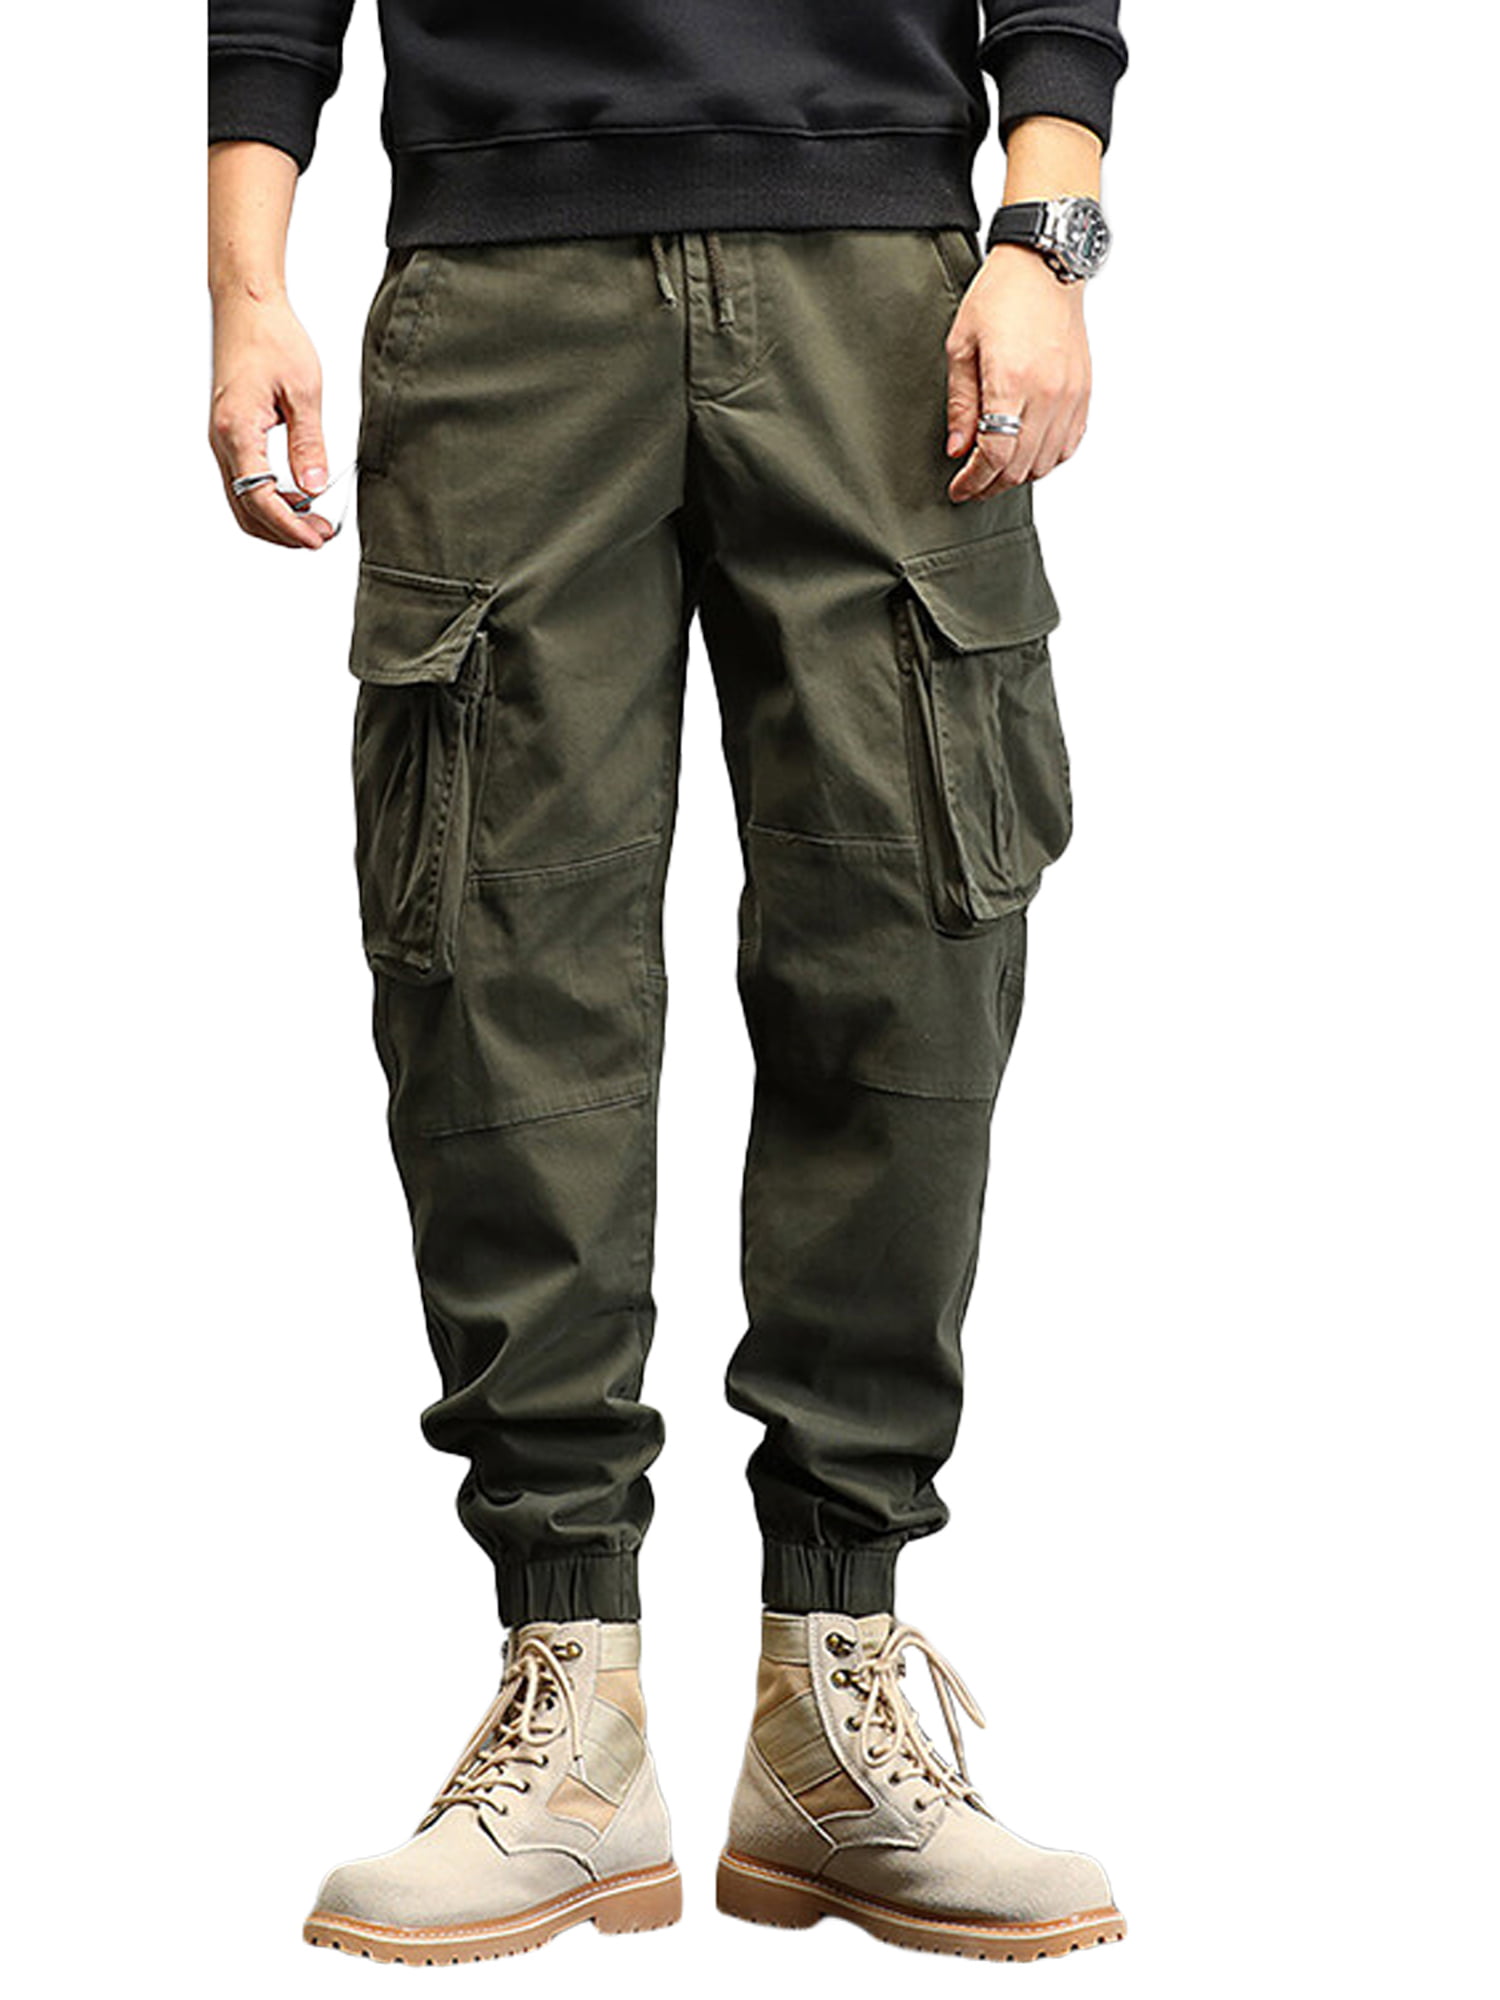 Mens Convertible Hiking Pants Zip Off Quick Dry Lightweight Safari Cargo Pants 